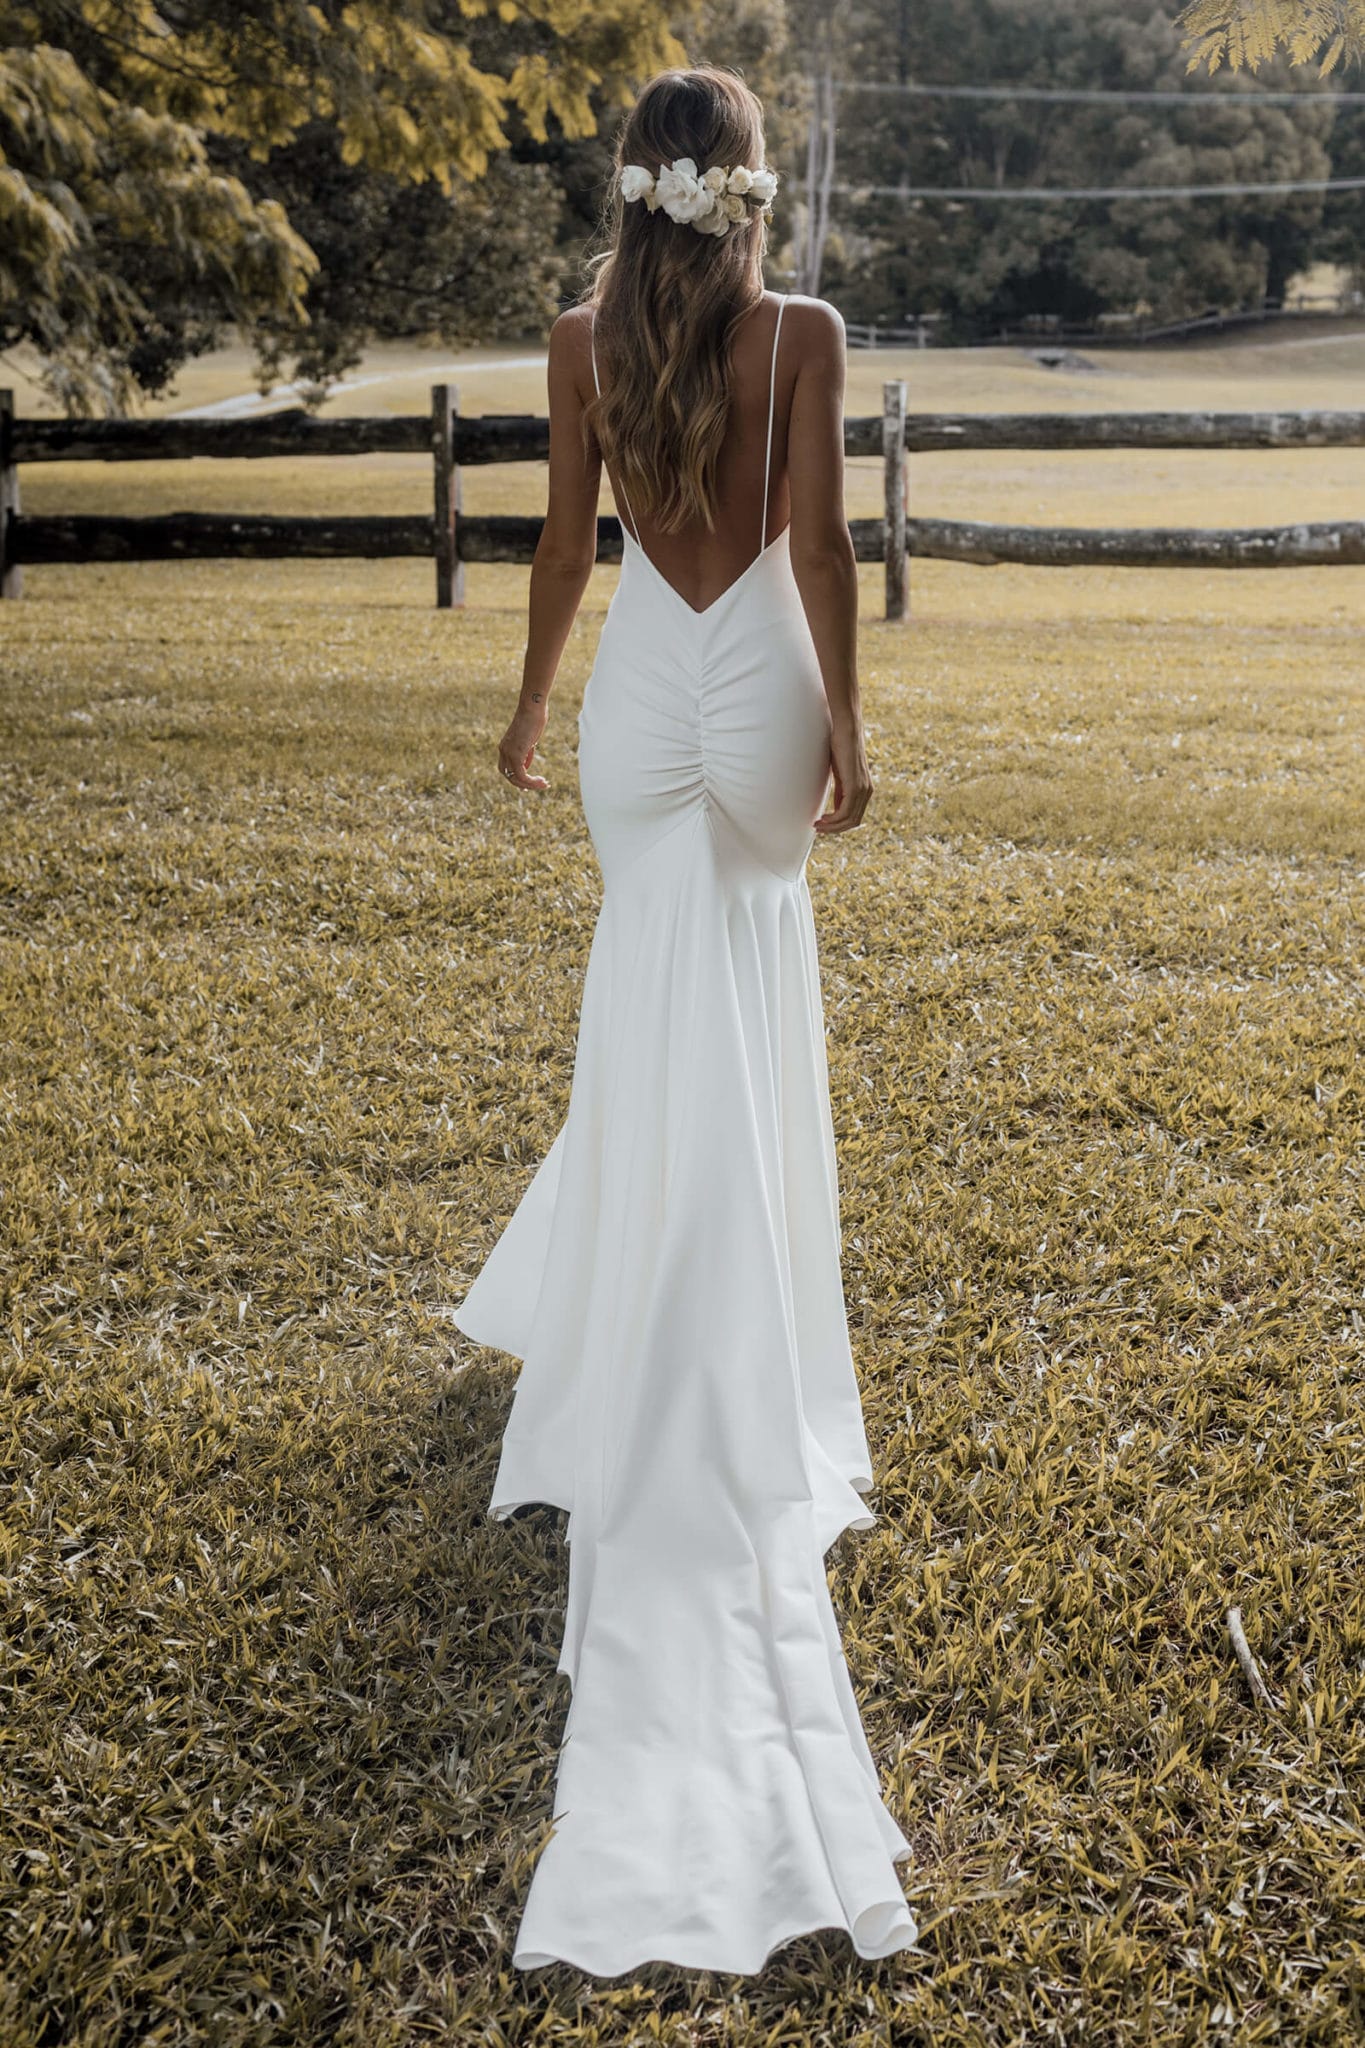 Crepe Fabrics : Wedding Dress Design - Bridal Fabrics